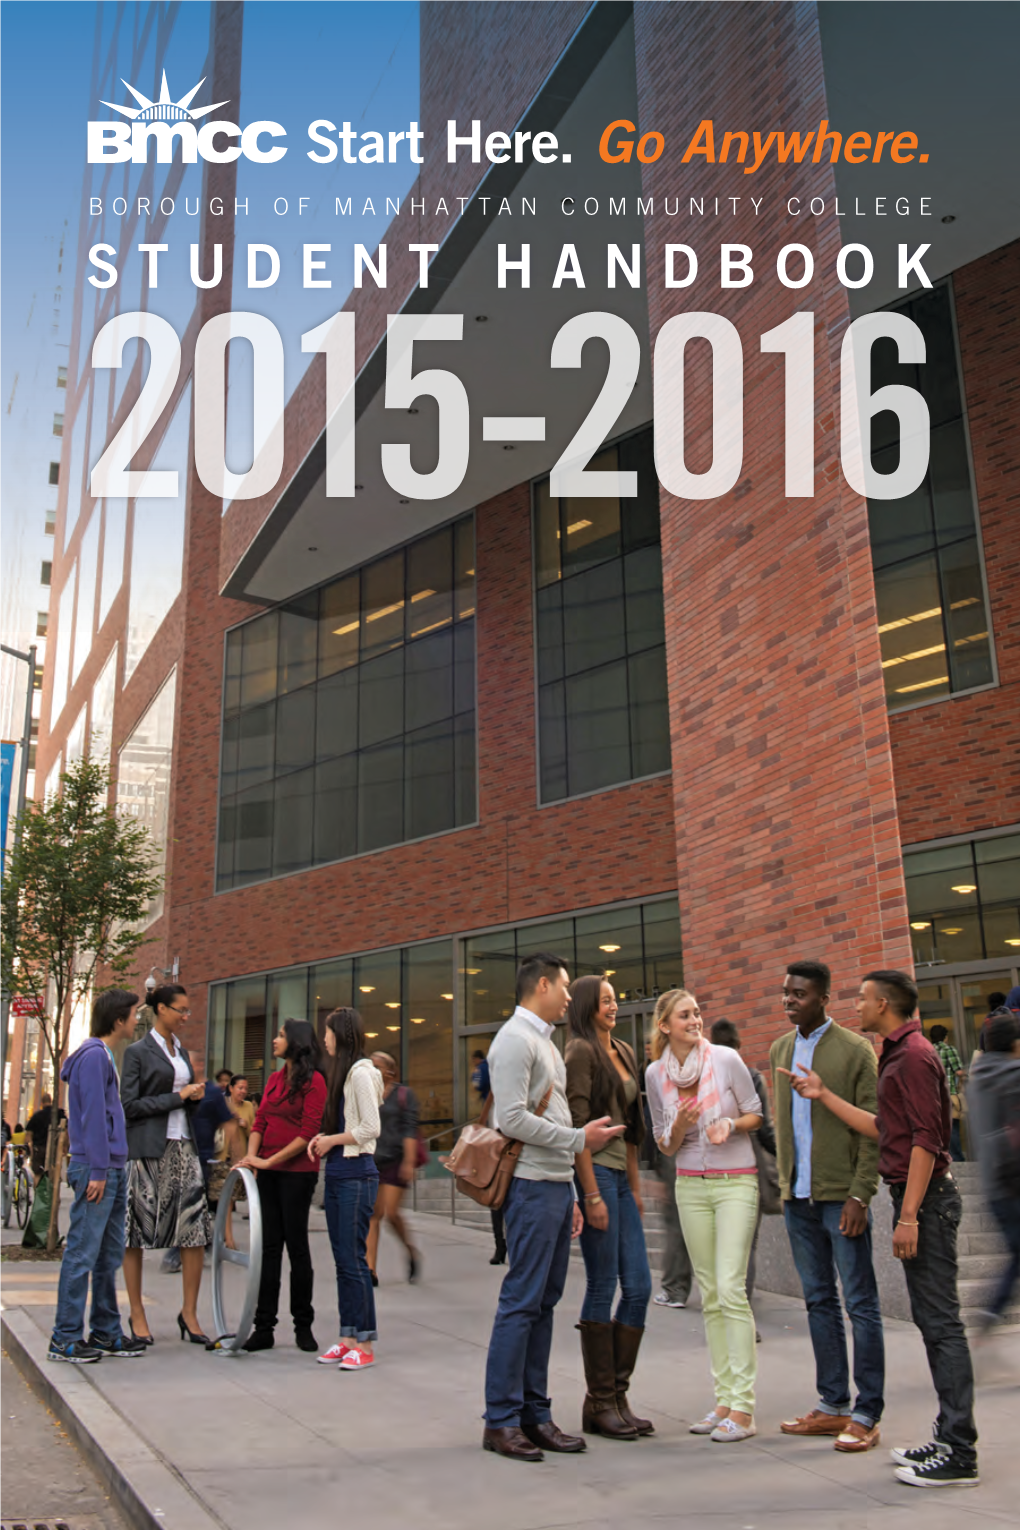 STUDENT HANDBOOK 2015-2016 Vandam St